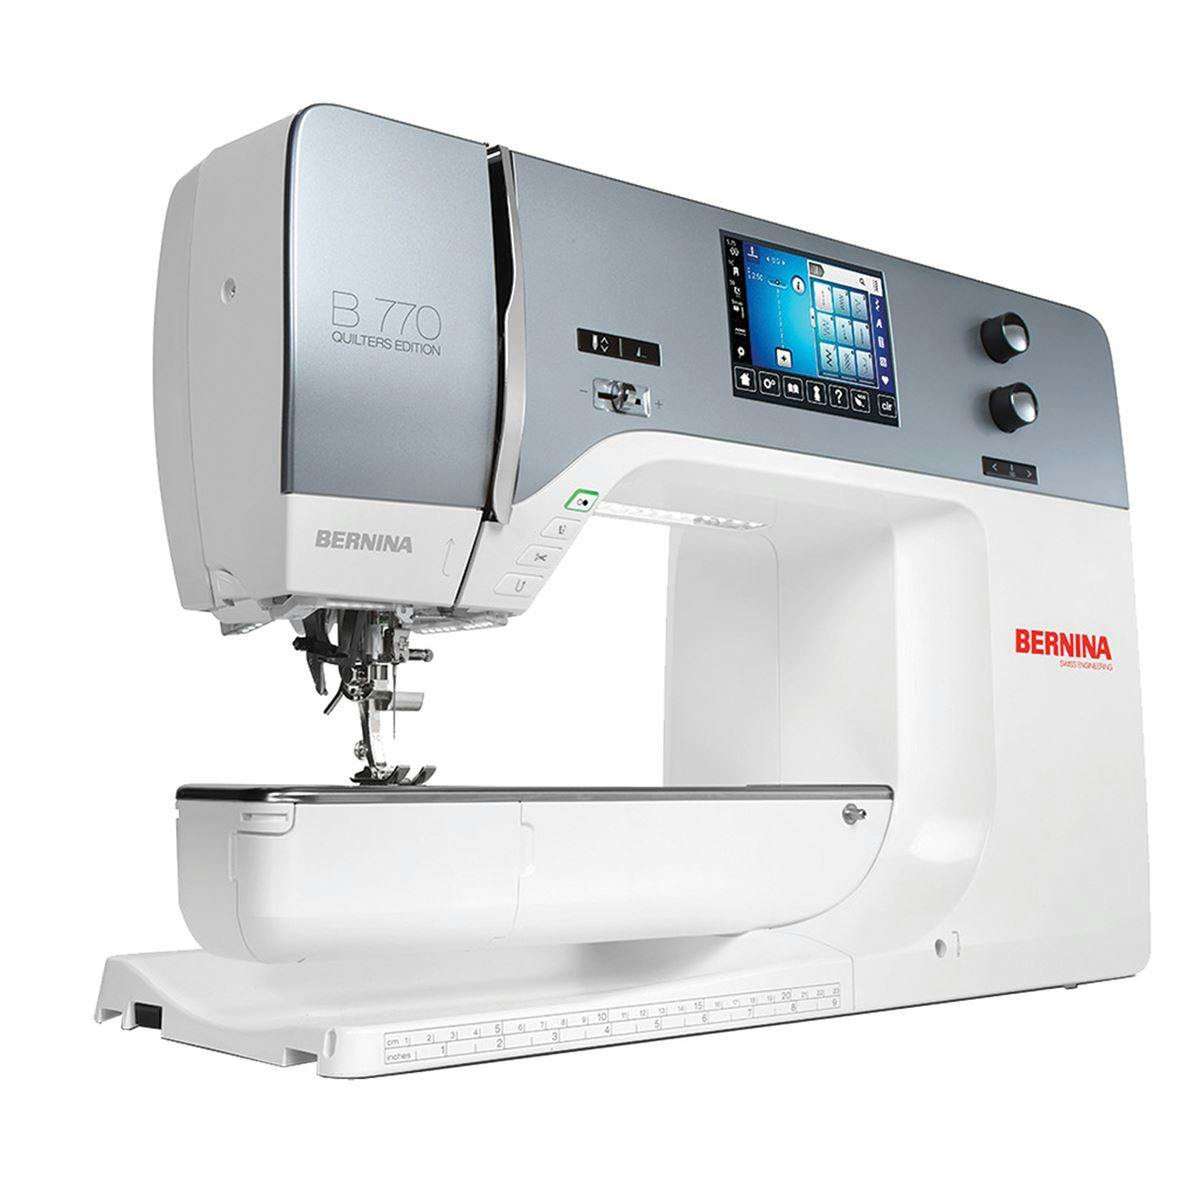 Bernina 770 QE quilting and sewing machine